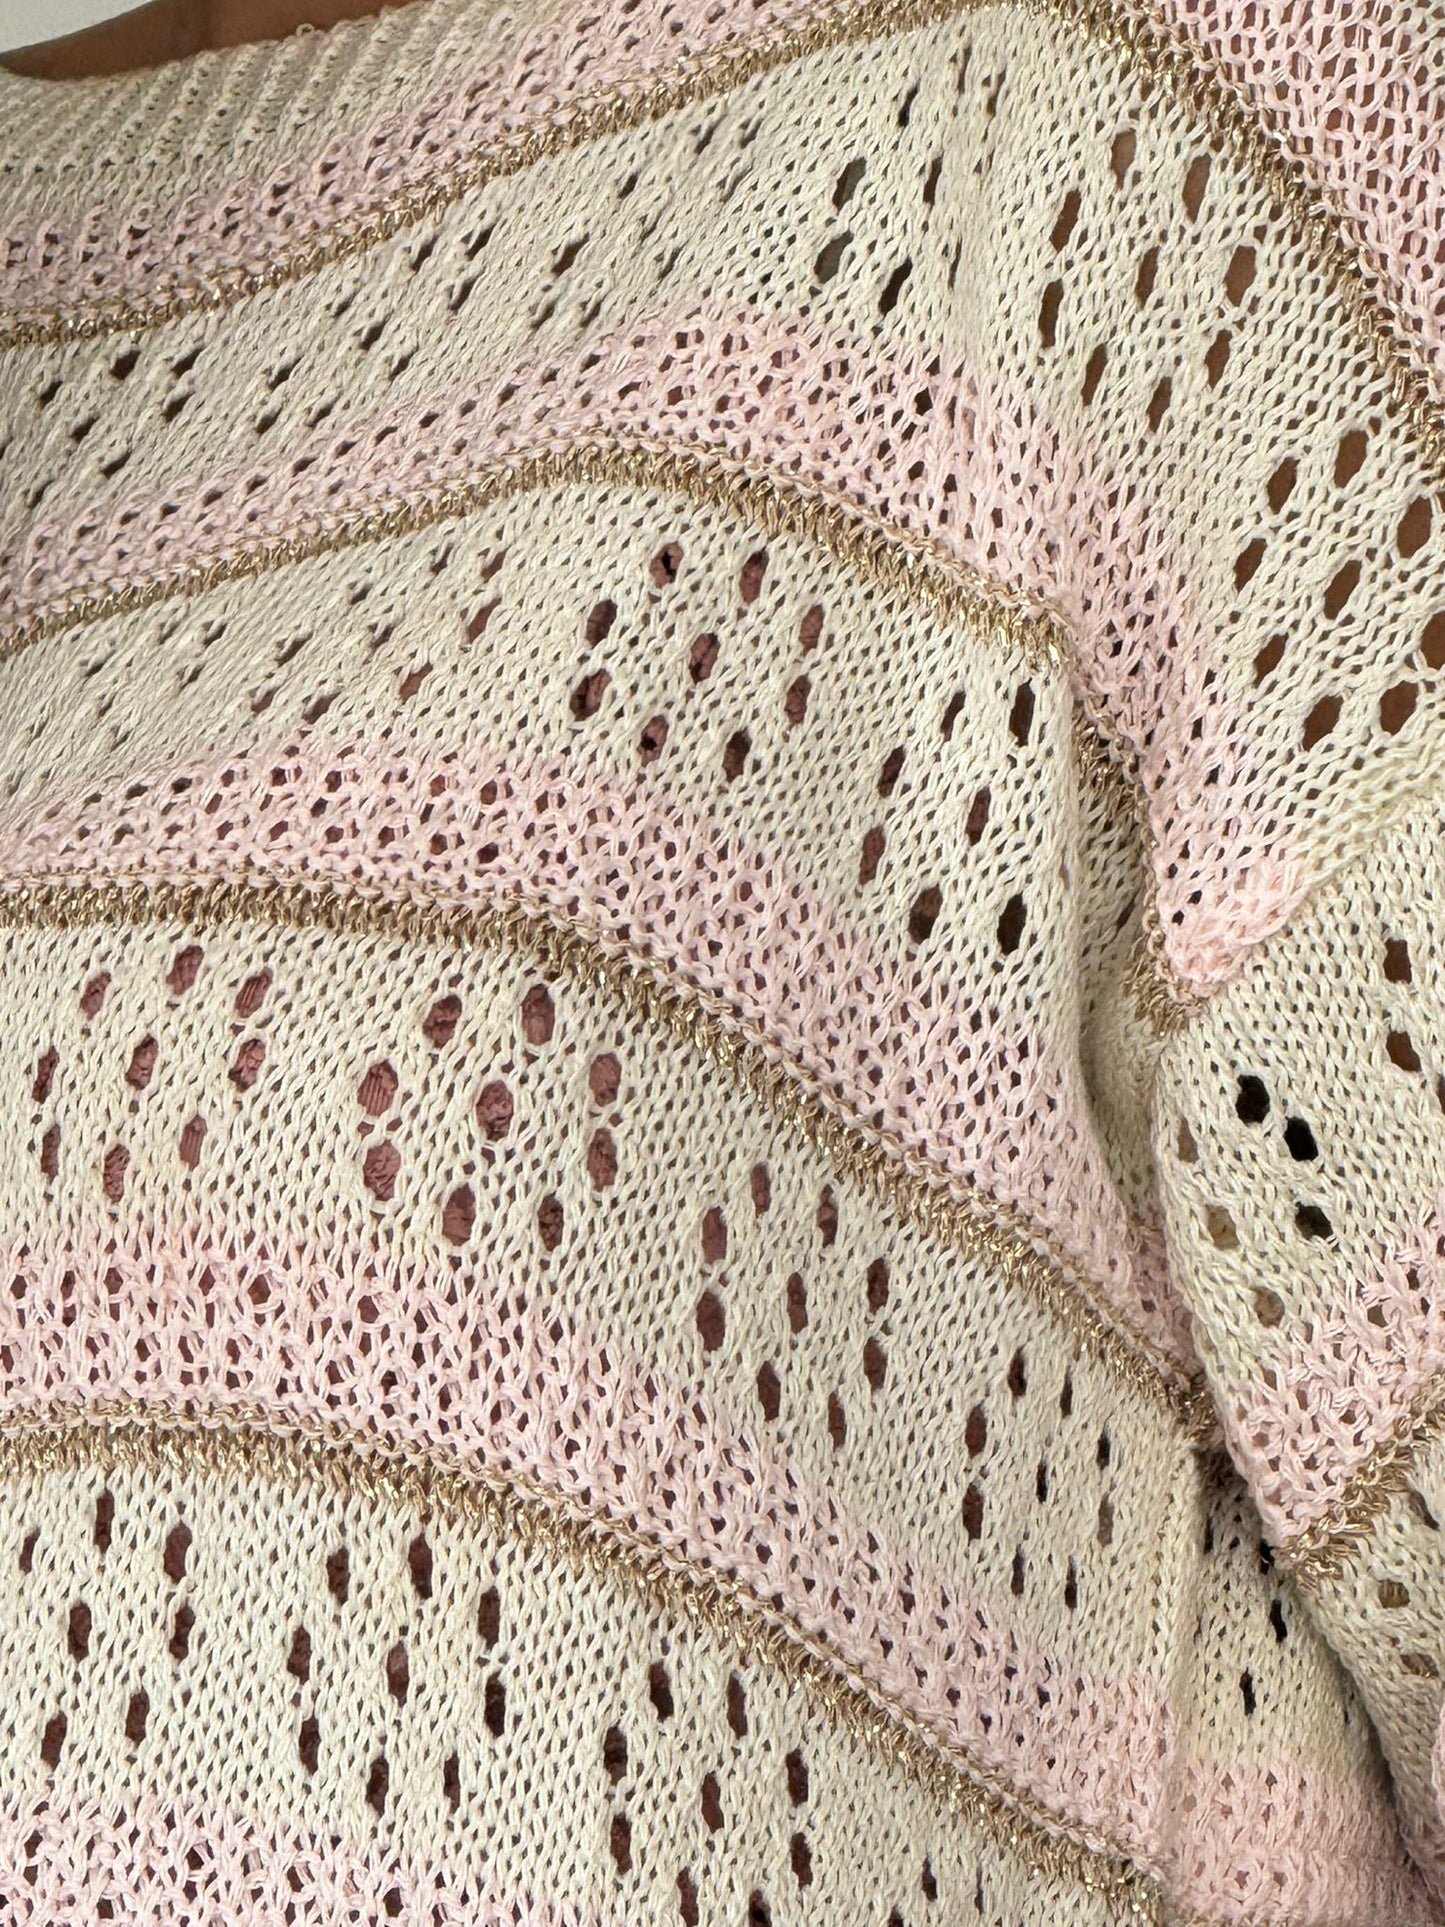 Pull crochet striped light pink